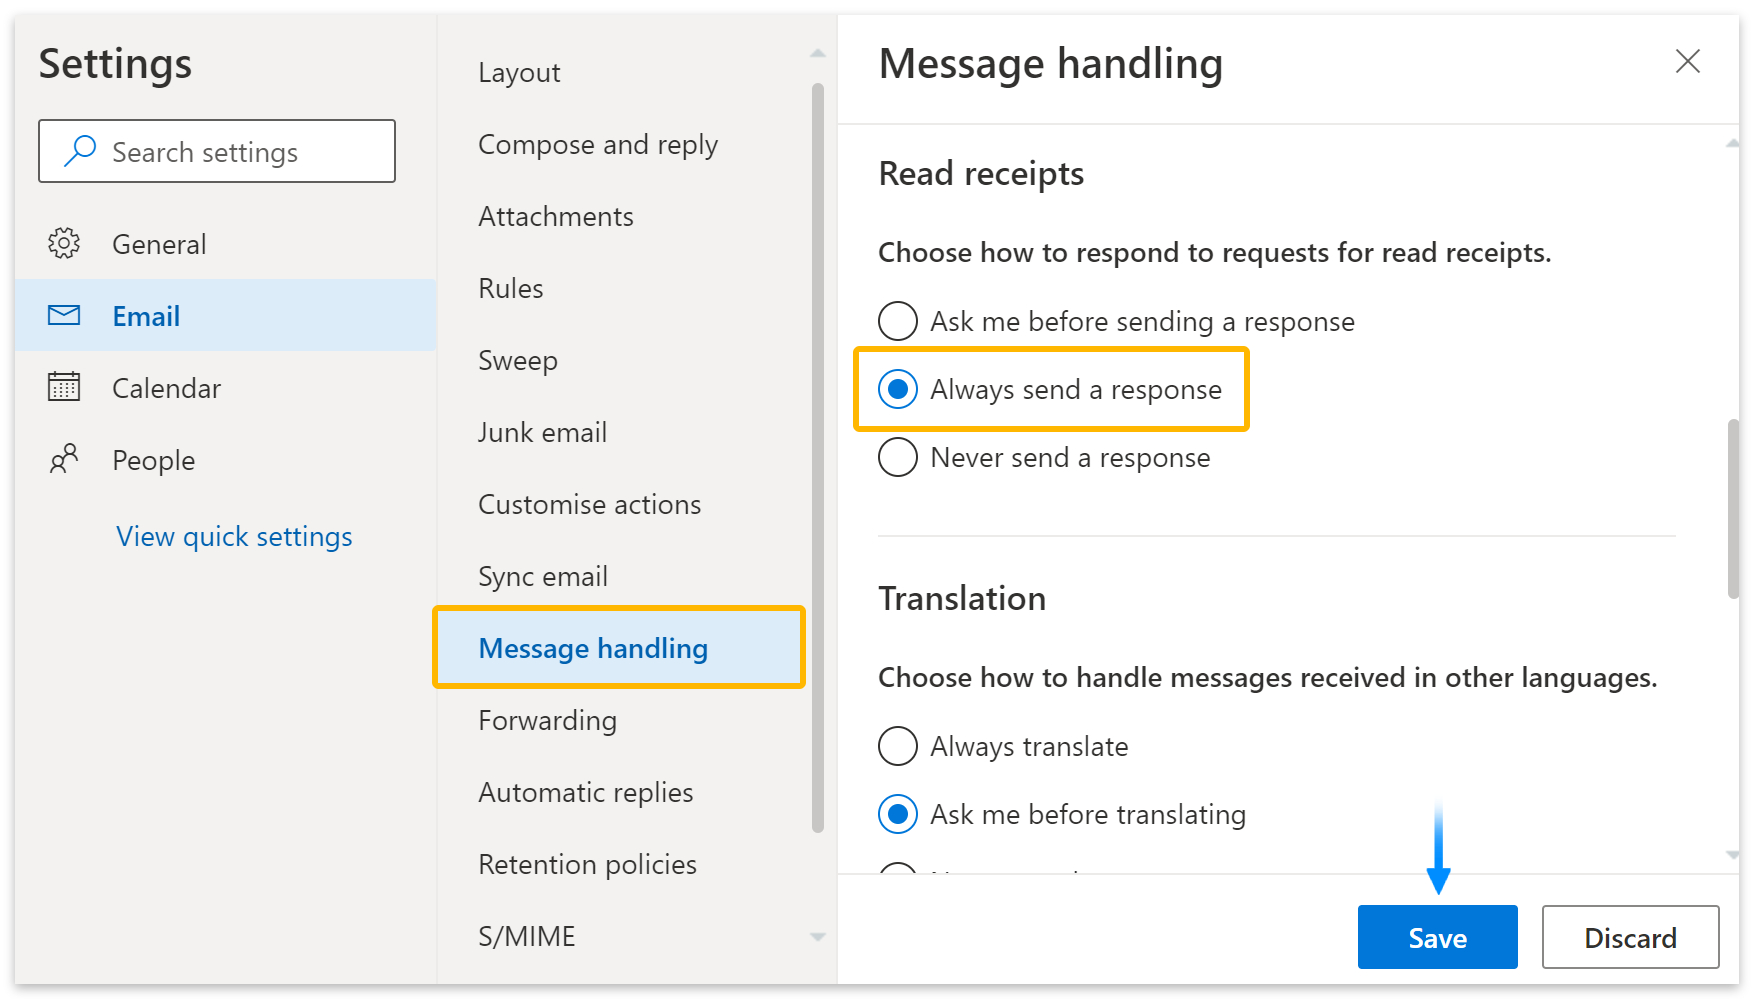 Message handling > Always send a response >Save.